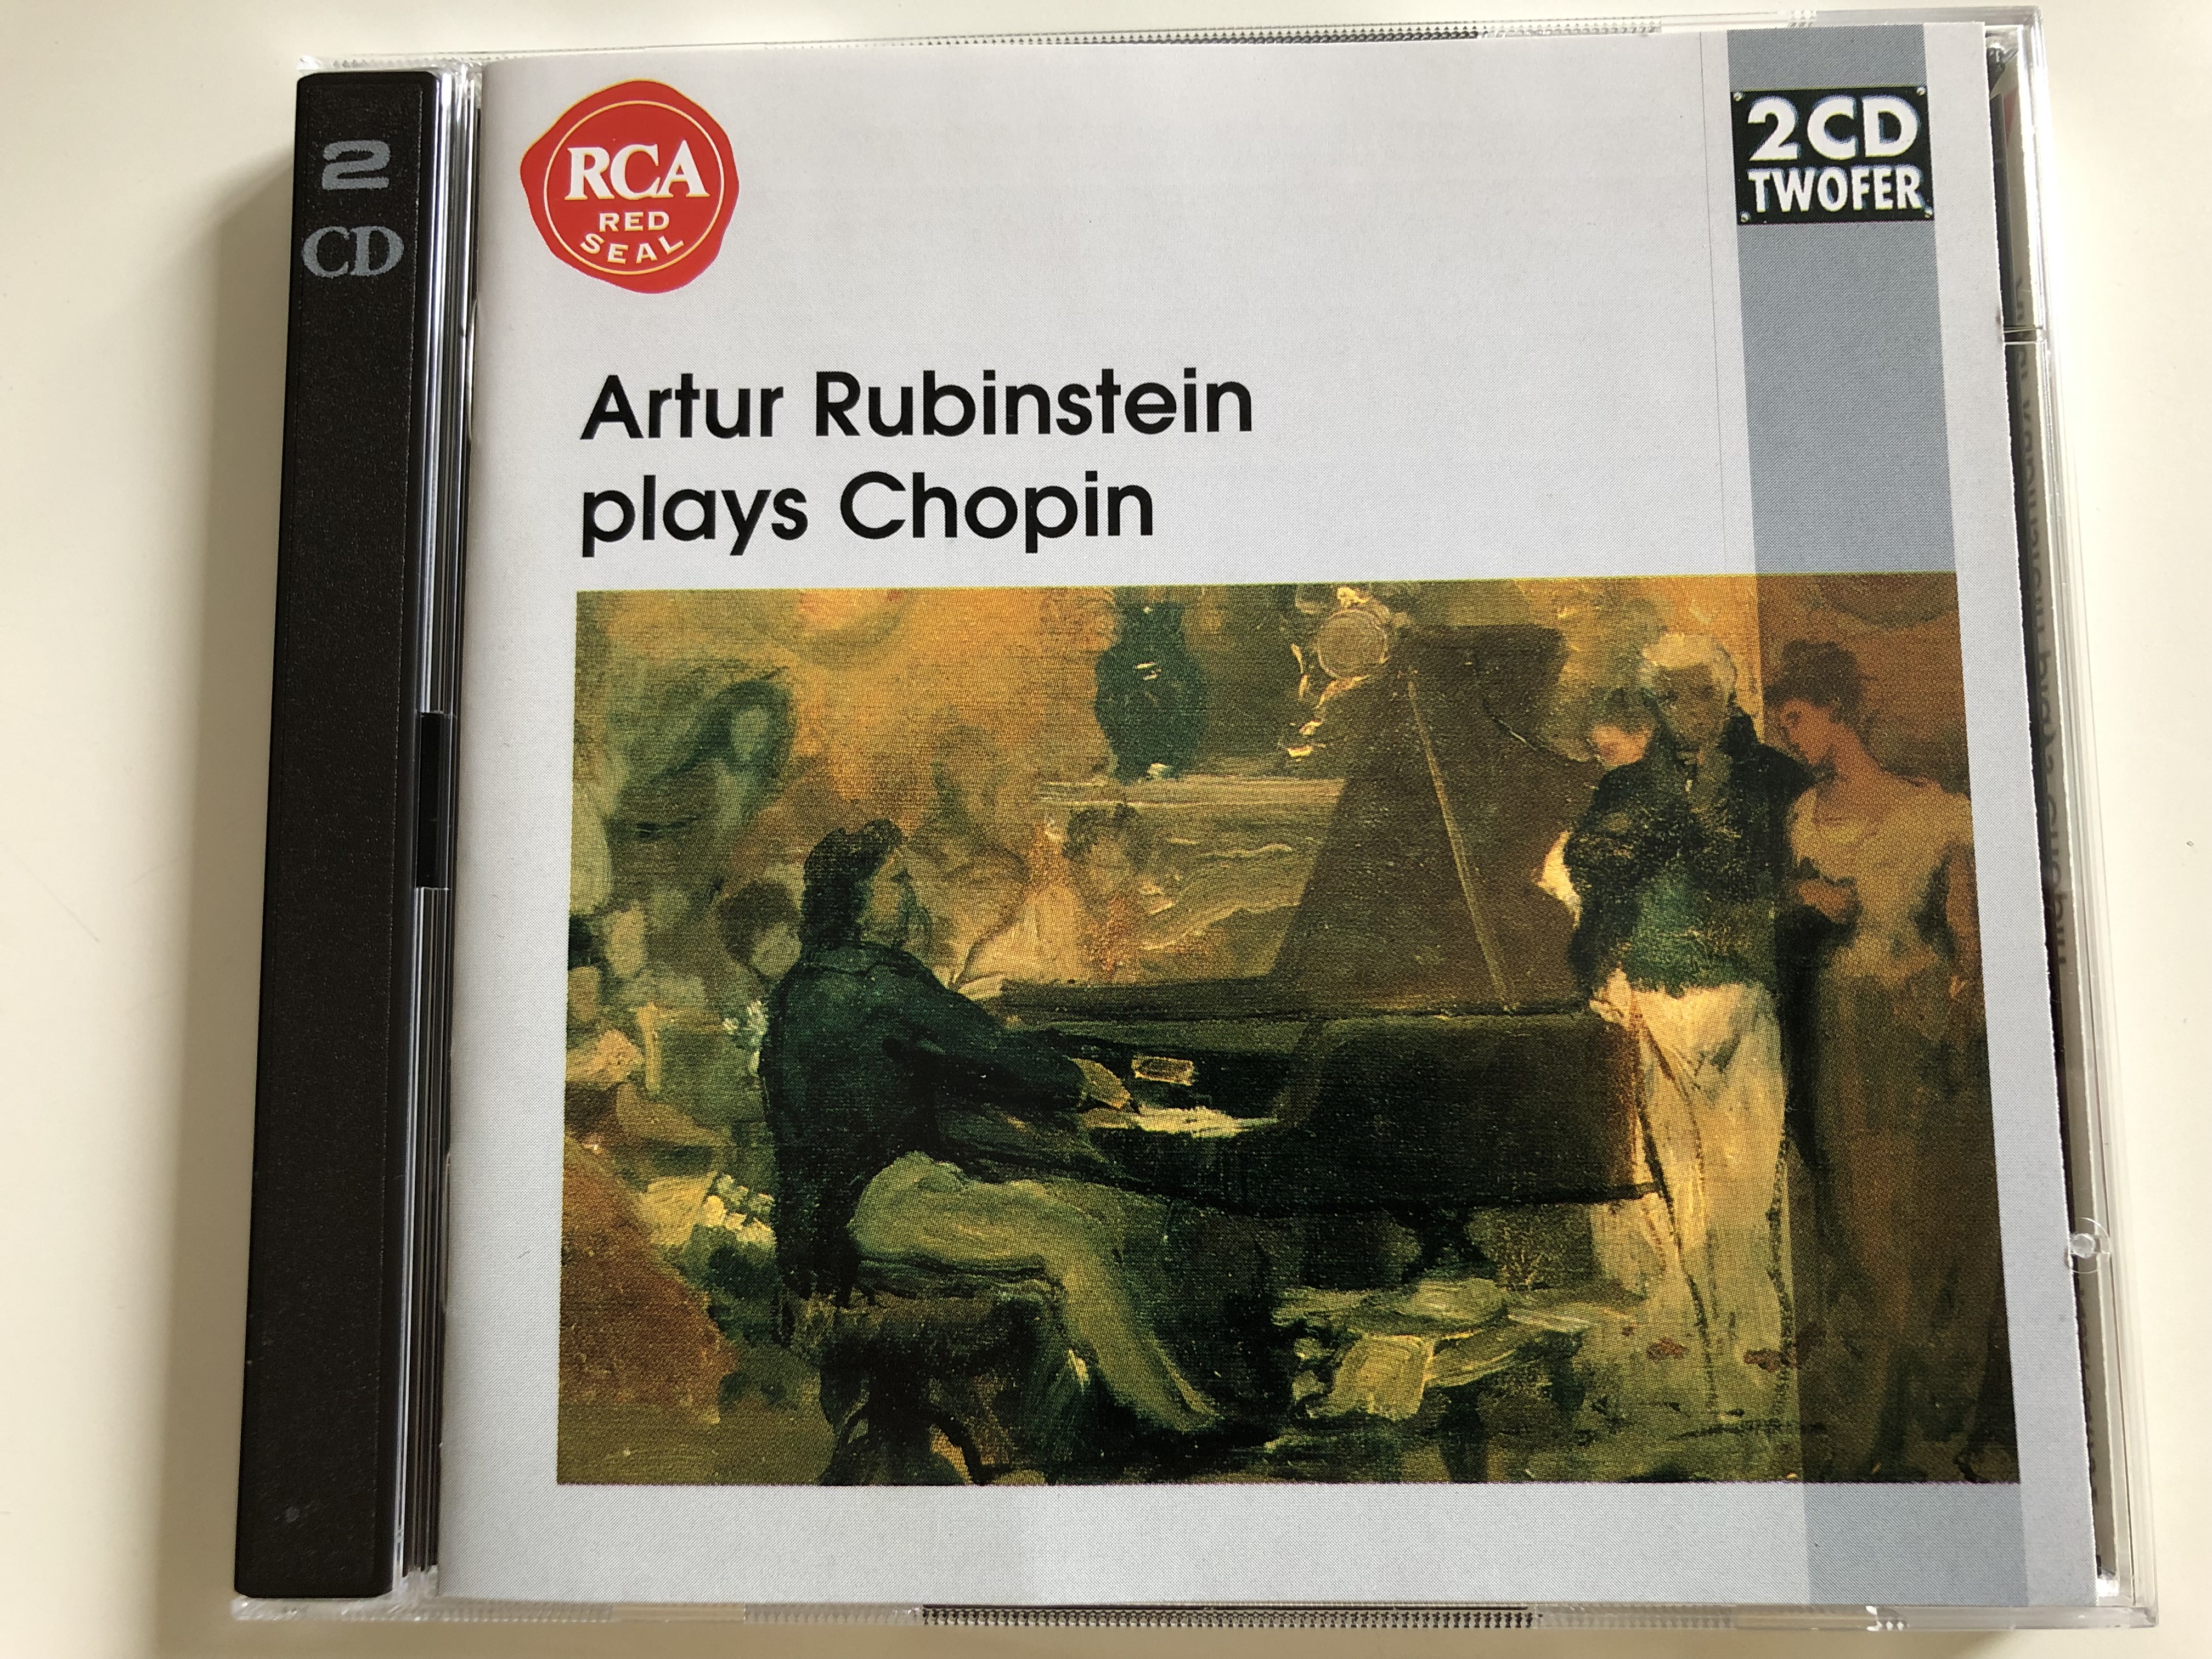 artur-rubinstein-plays-chopin-symphony-of-the-air-alfred-wallenstein-2cd-audio-cd-rca-read-seal-1-.jpg